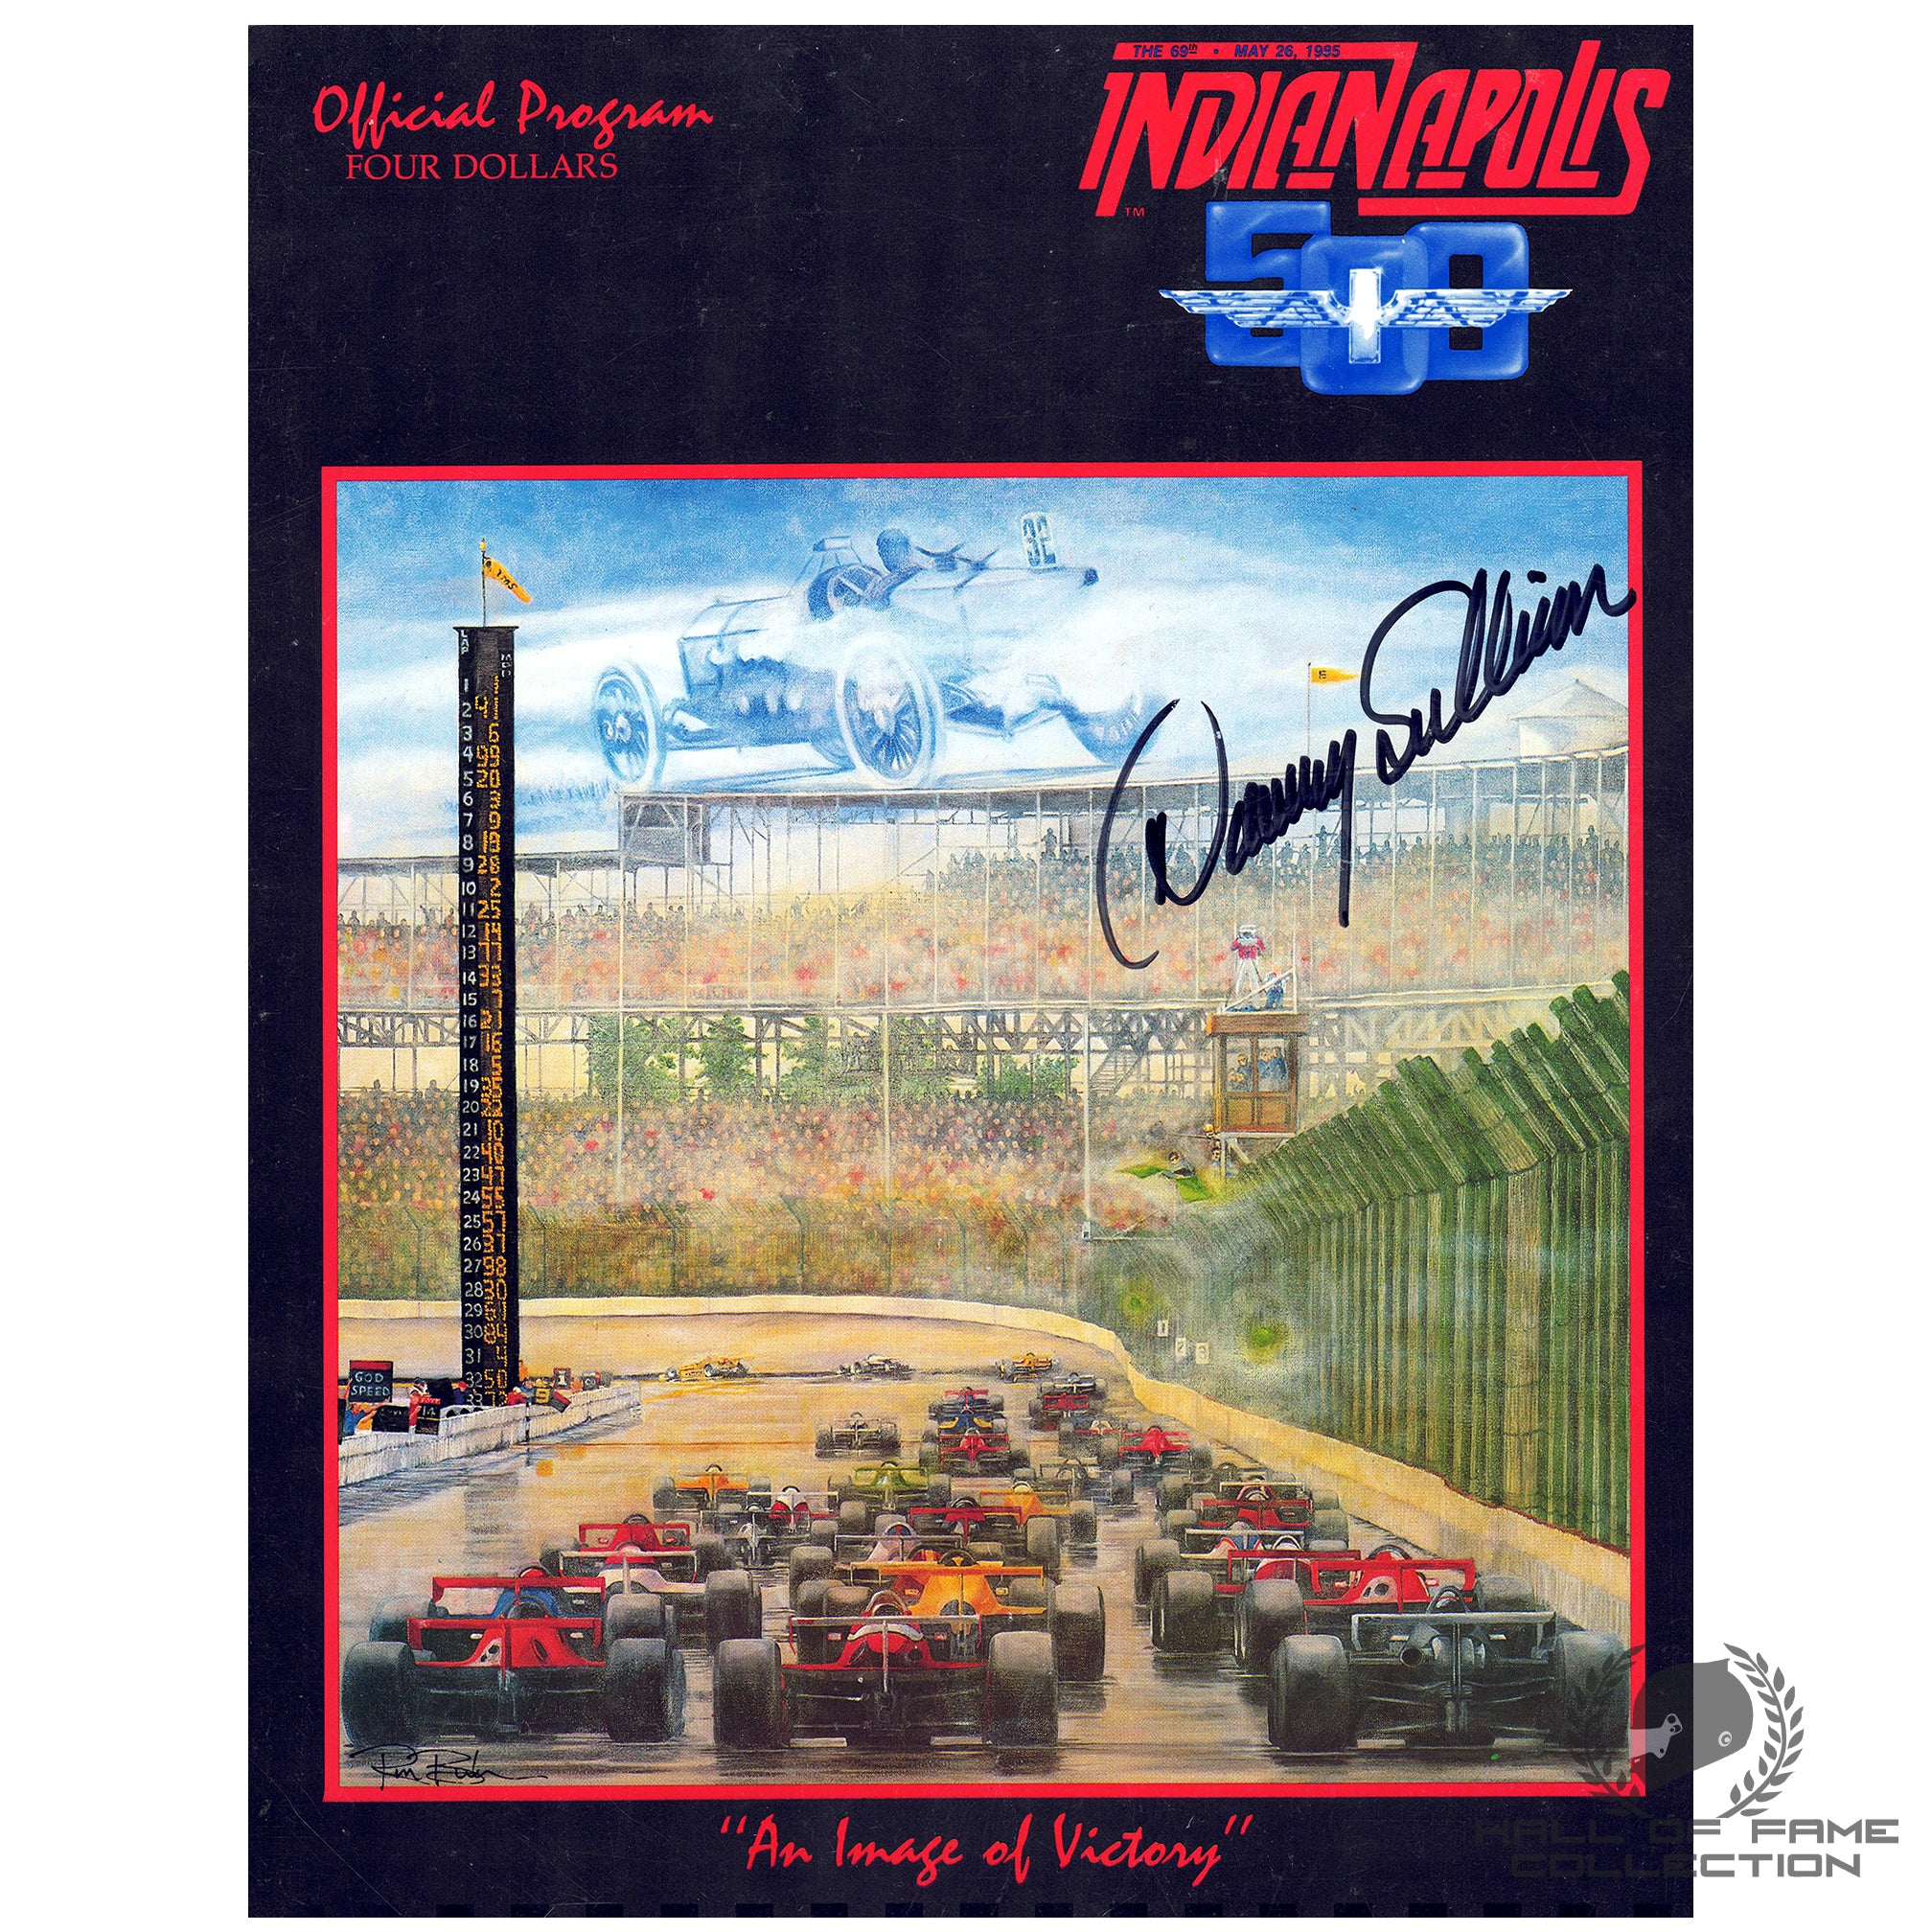 1985 Indianapolis 500 Original Program Signed By Winner Danny Sullivan